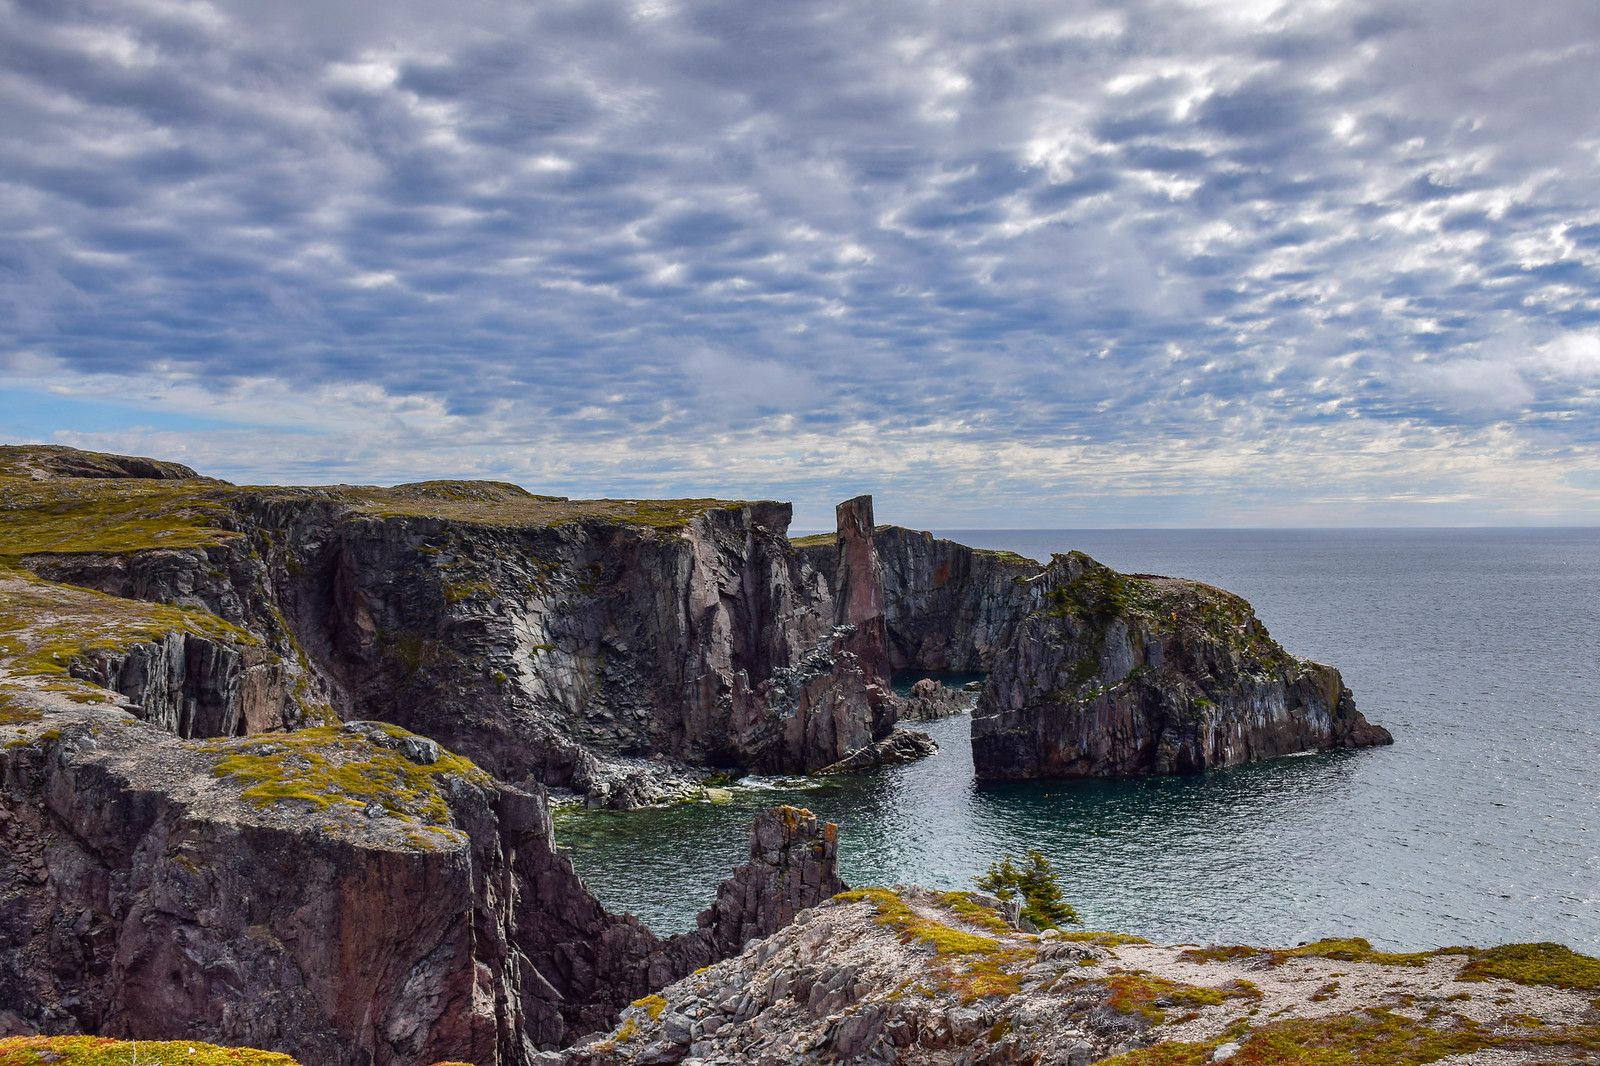 Seastacks and rugged coastline near Bonavista where you can see Newfoundland puffins